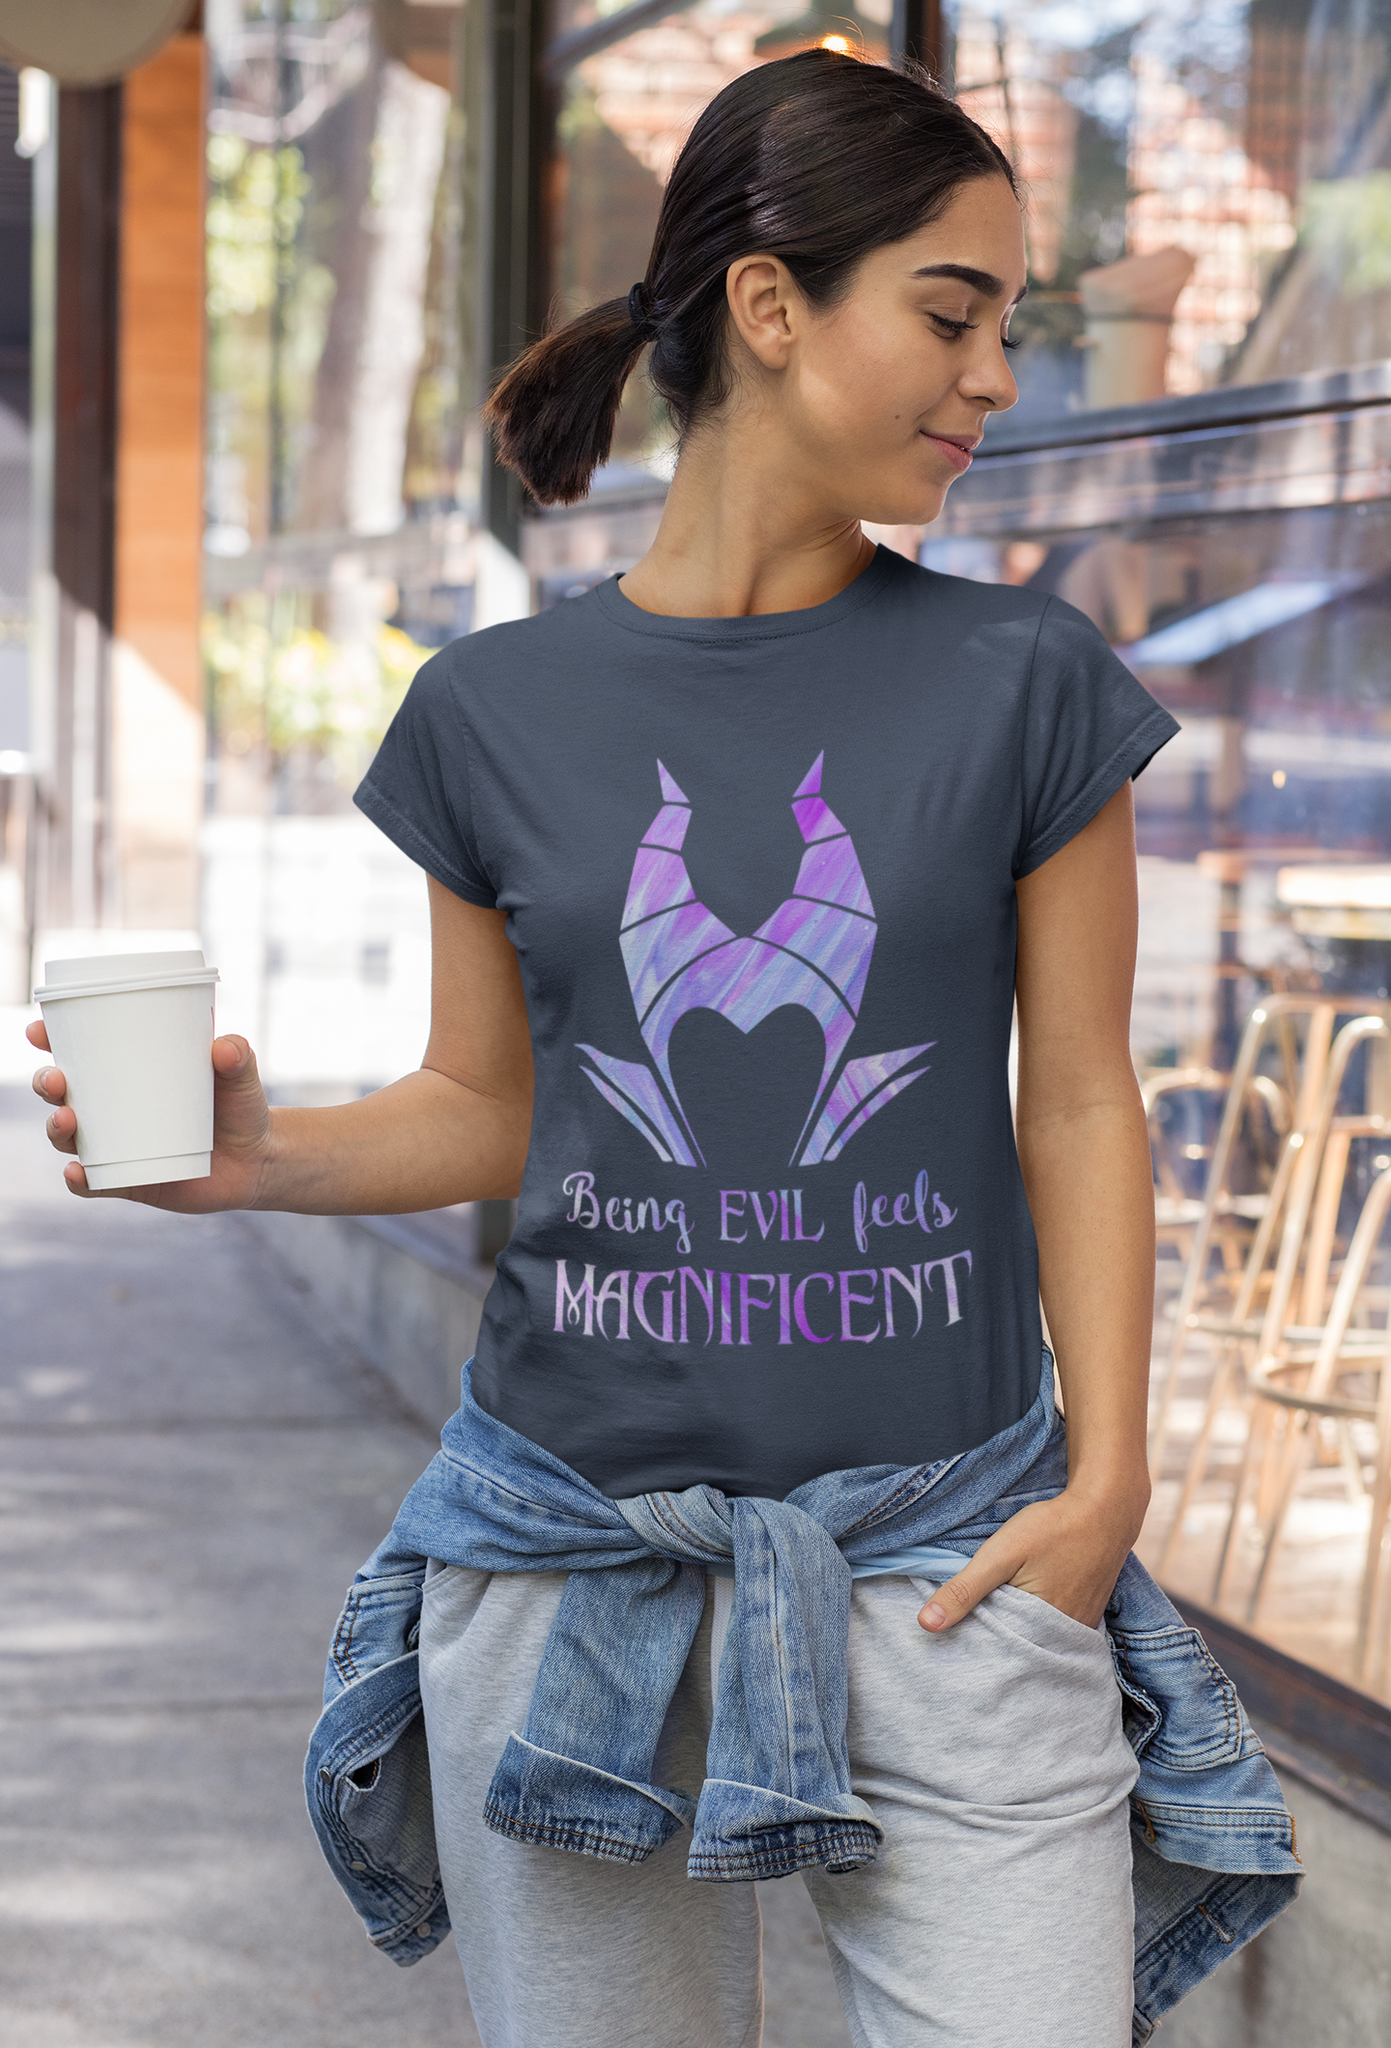 Disney Maleficent T Shirt, Being Evil Feels Magnificent Tshirt, Disney Villains Shirt